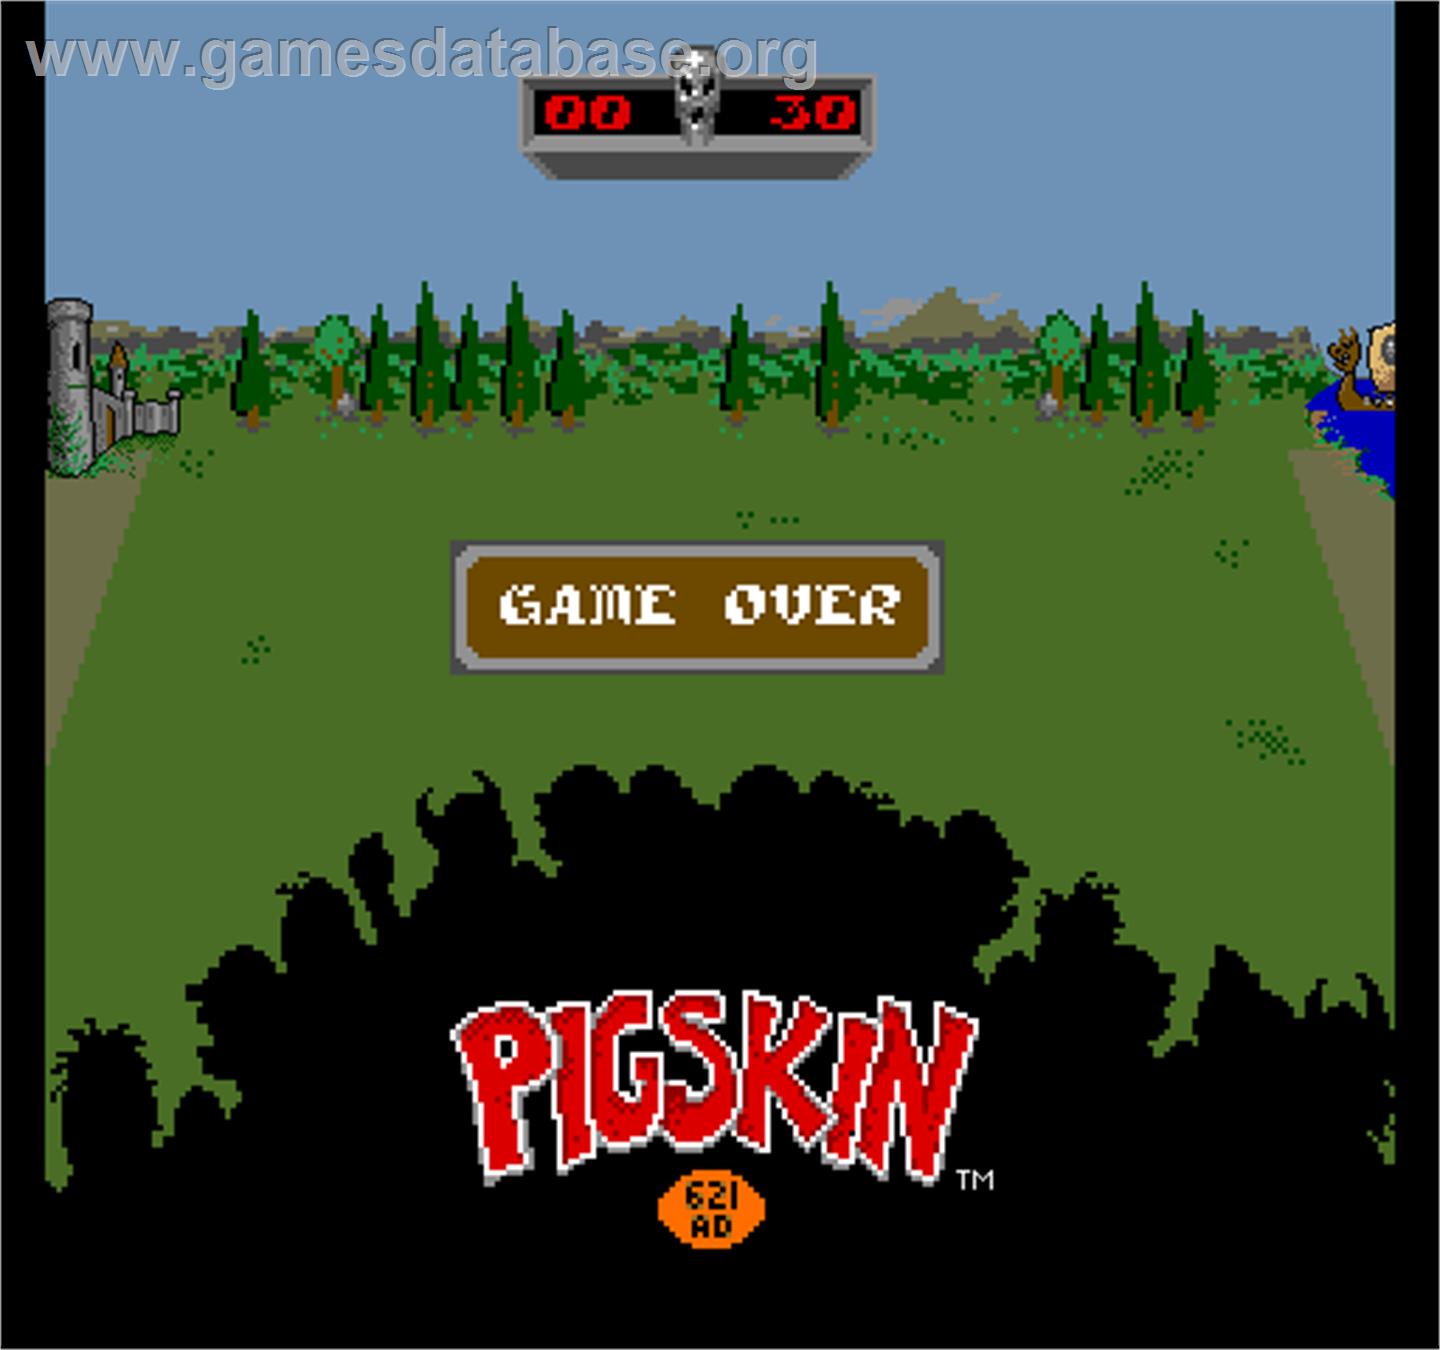 Pigskin 621AD - Arcade - Artwork - Game Over Screen